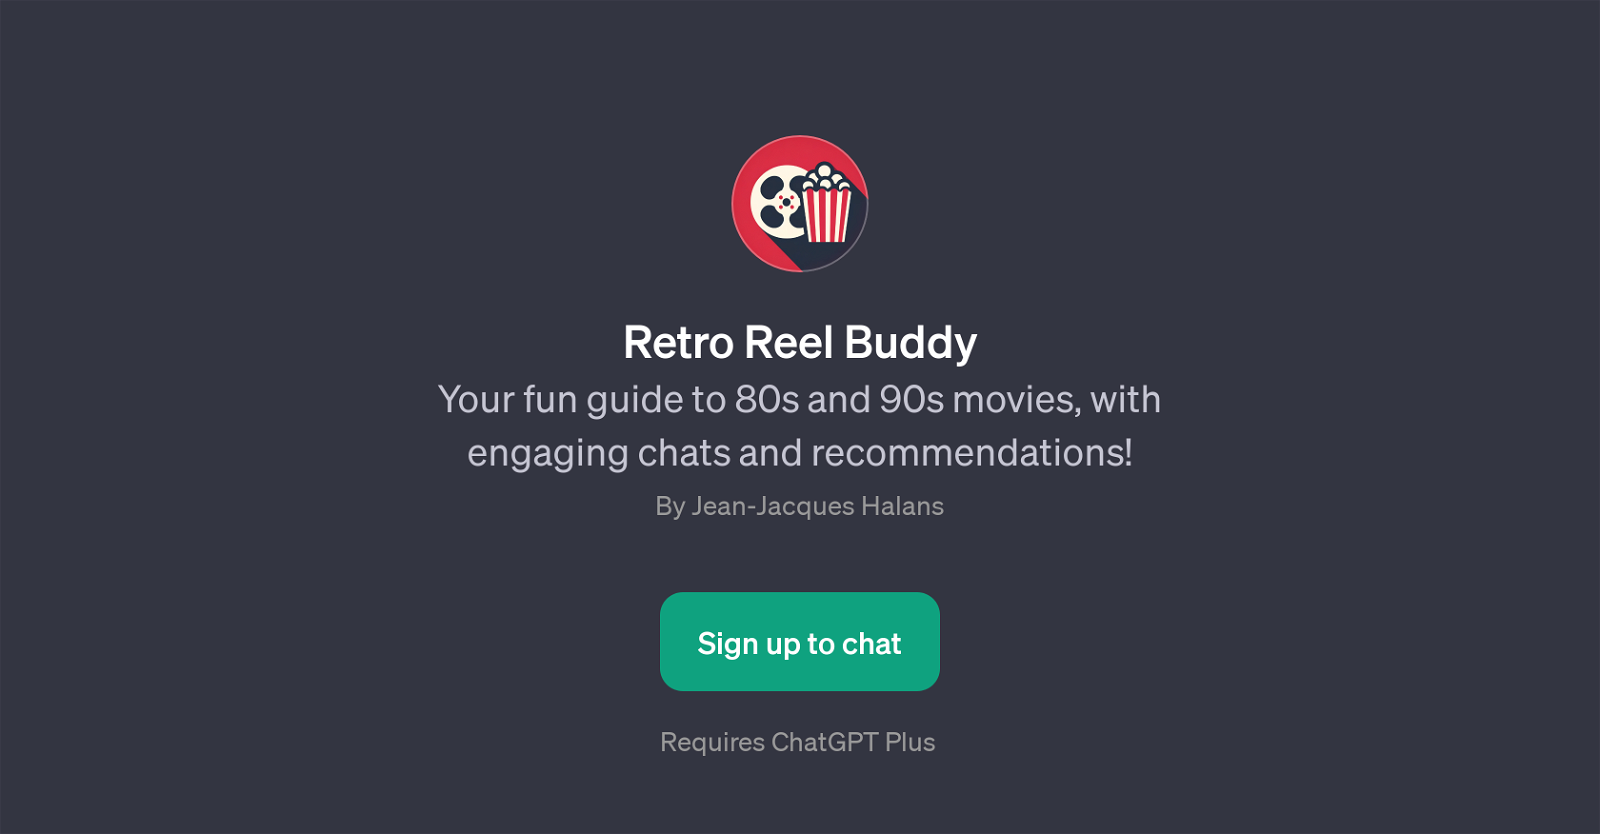 Retro Reel Buddy website